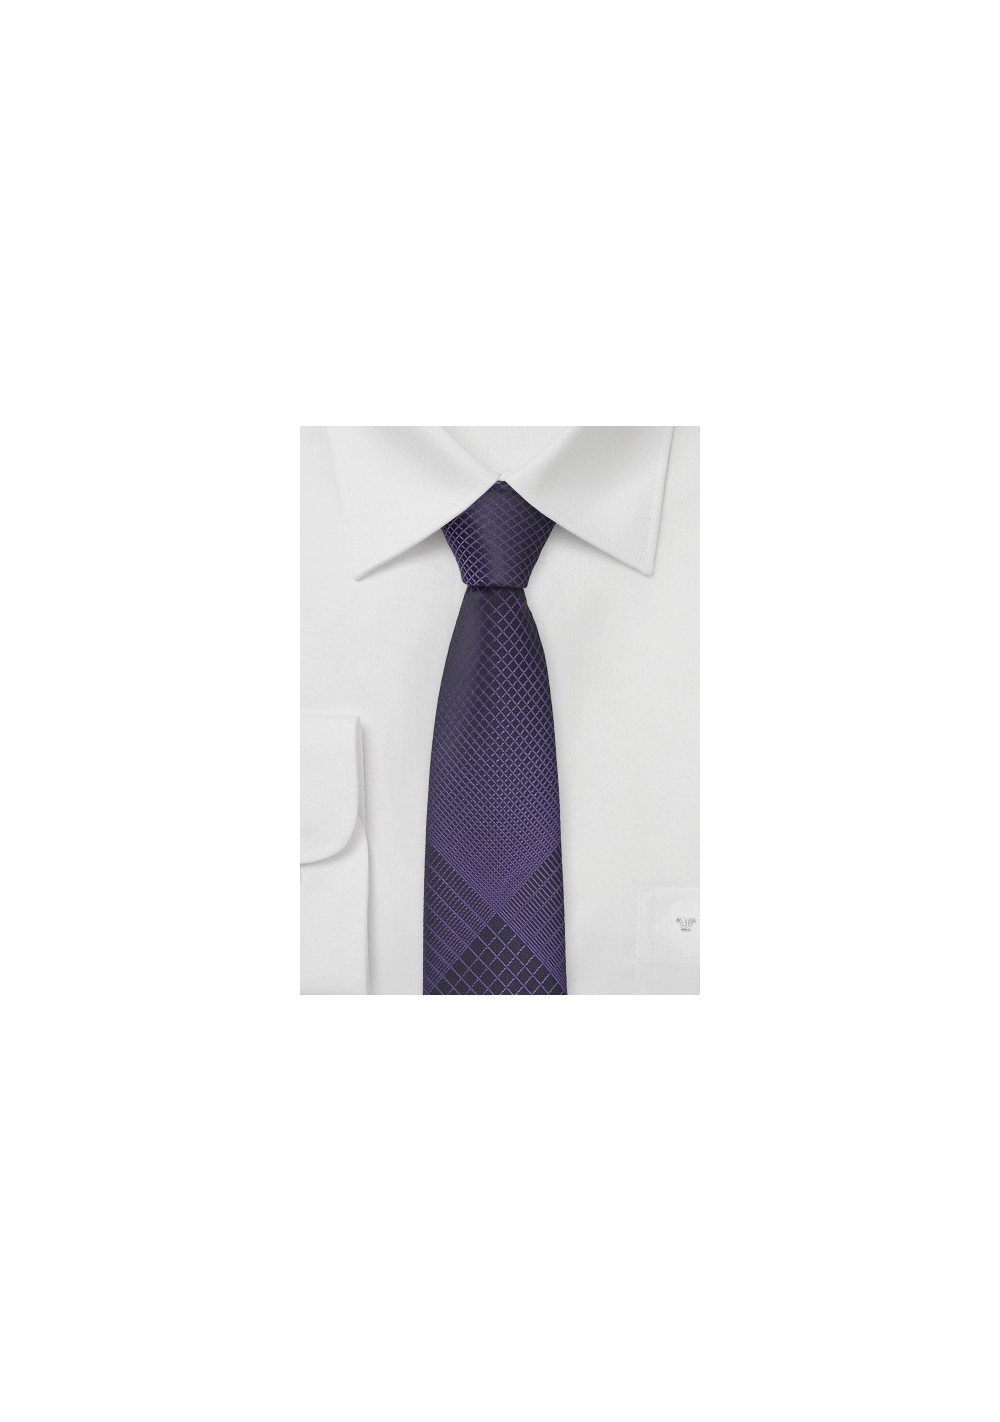 Ultra Slim Tie in Purple and Black